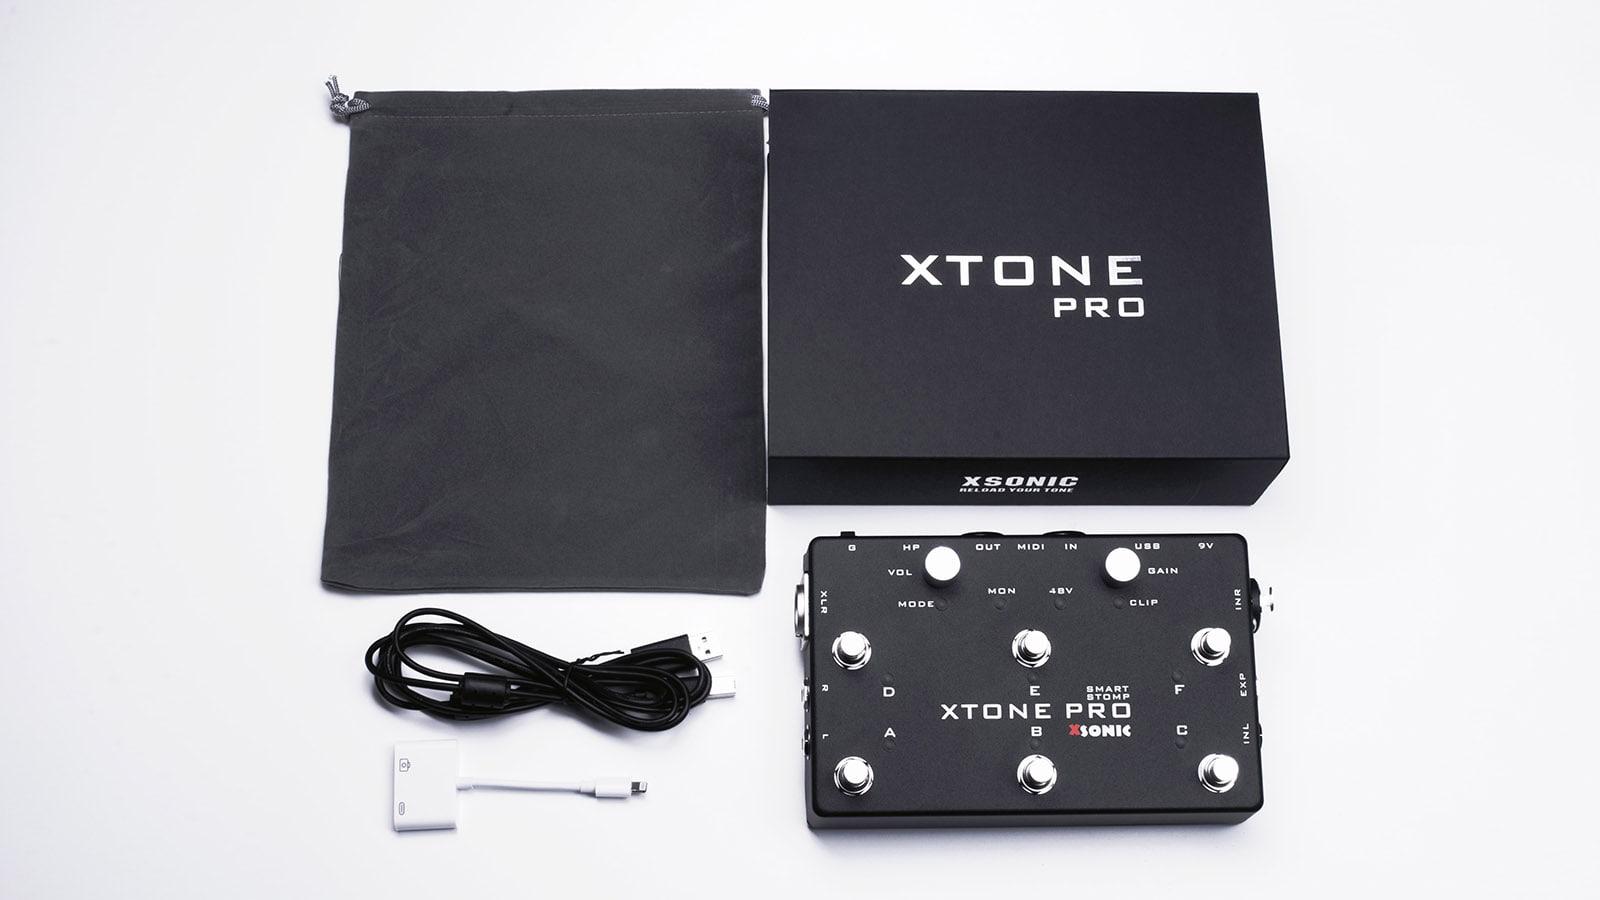 XTONE PRO - XSONIC | Hookup, Inc.